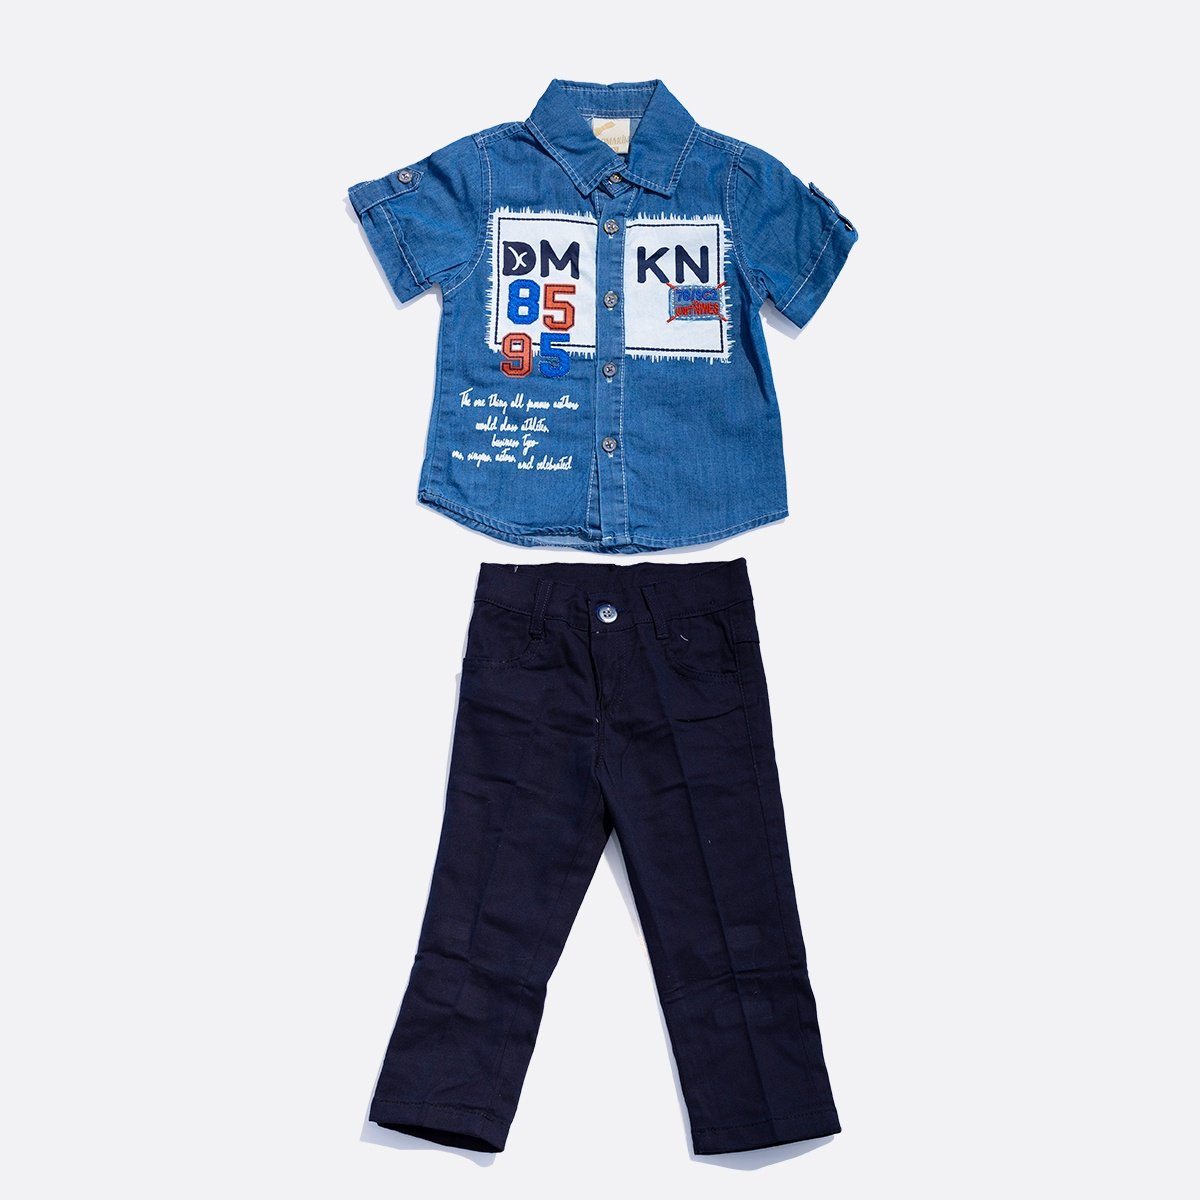 Casual Jeans Shirt & Pants Toddler Set - Navy Blue General DOMAKIN 